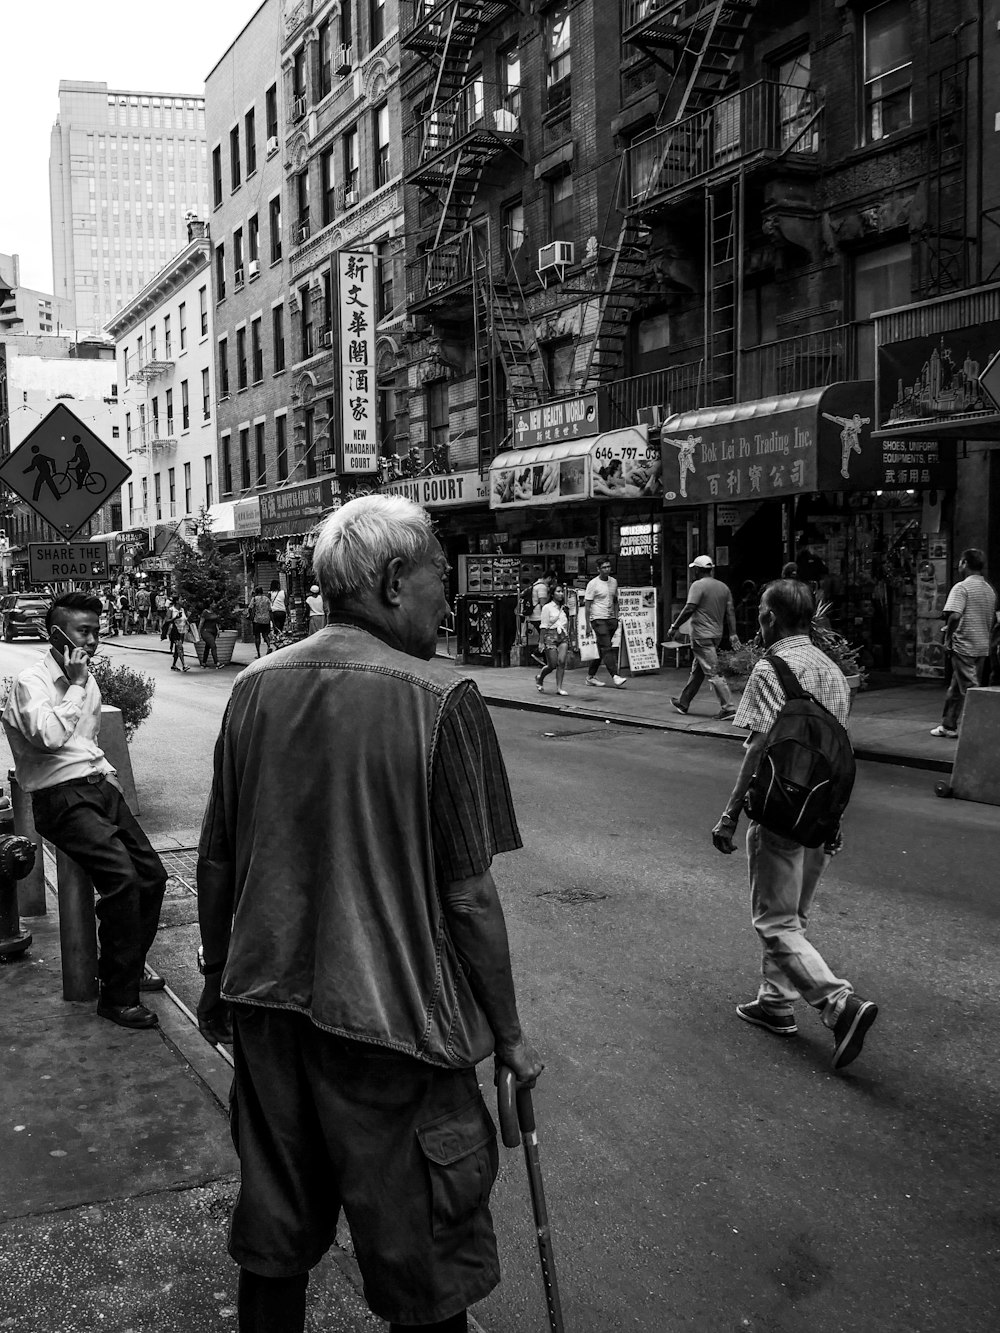 grayscale photography of people walking near street